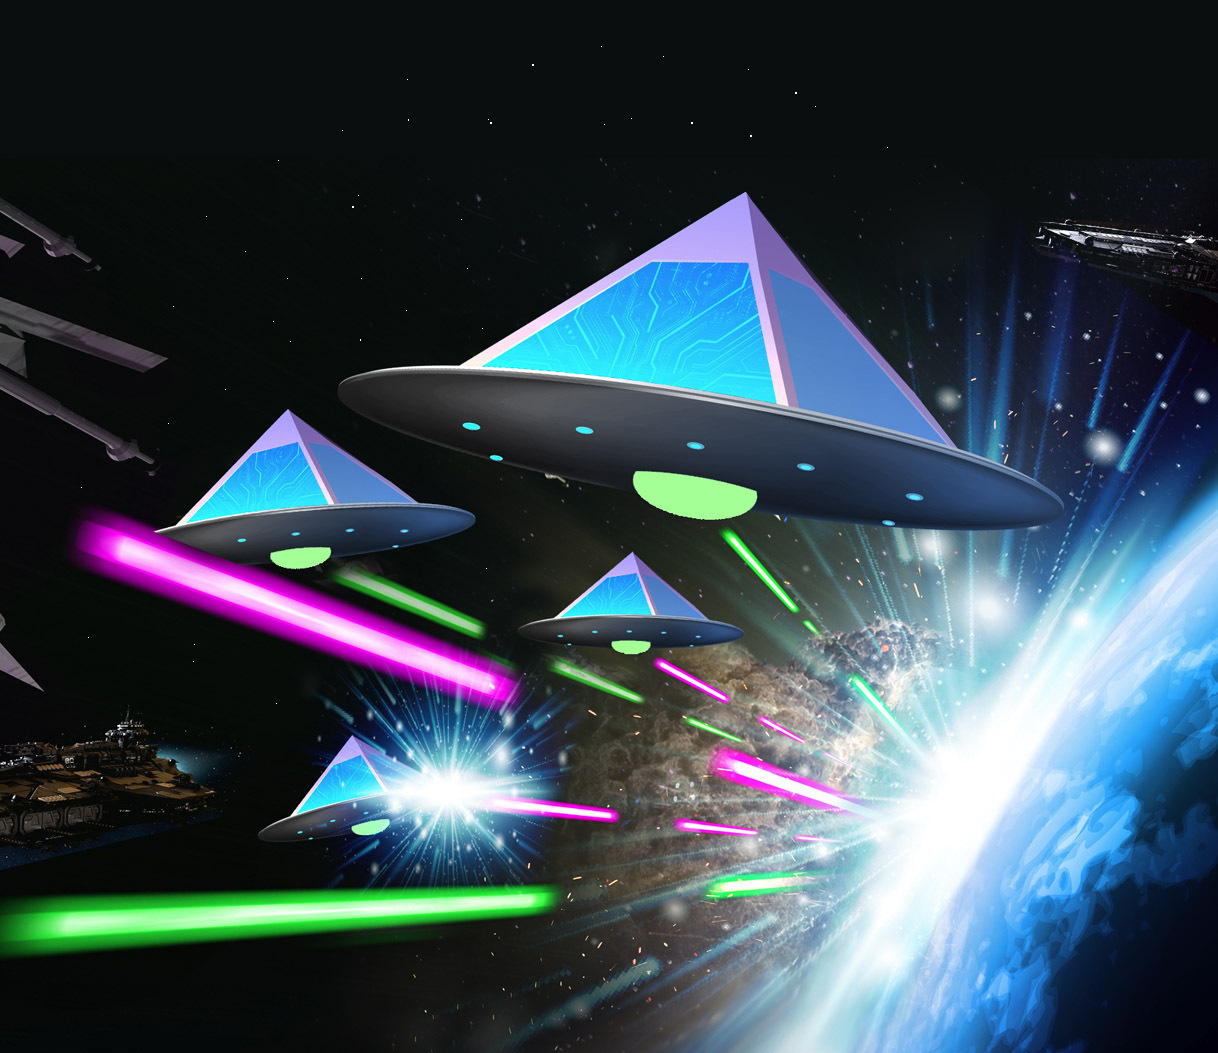 UFOs with pyramidal shape shooting lasers